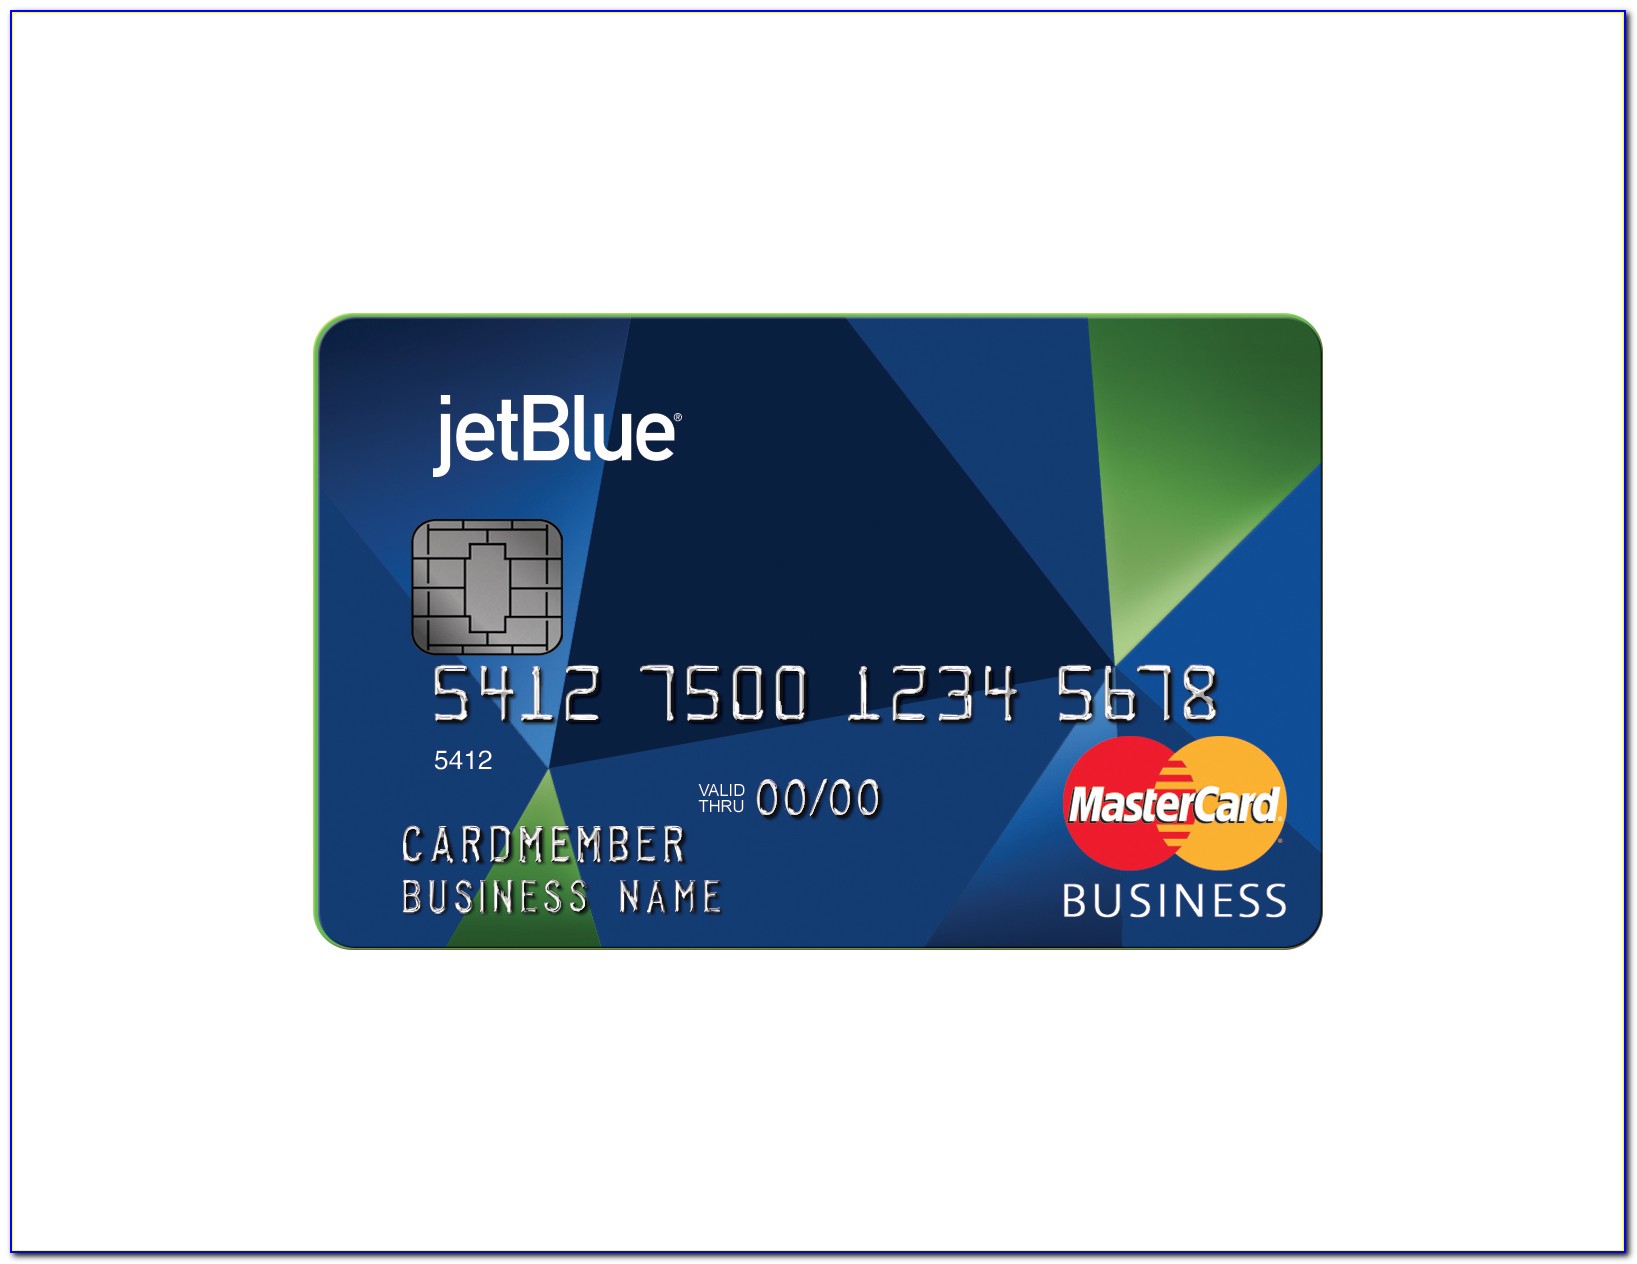 Jetblue Business Card Benefits